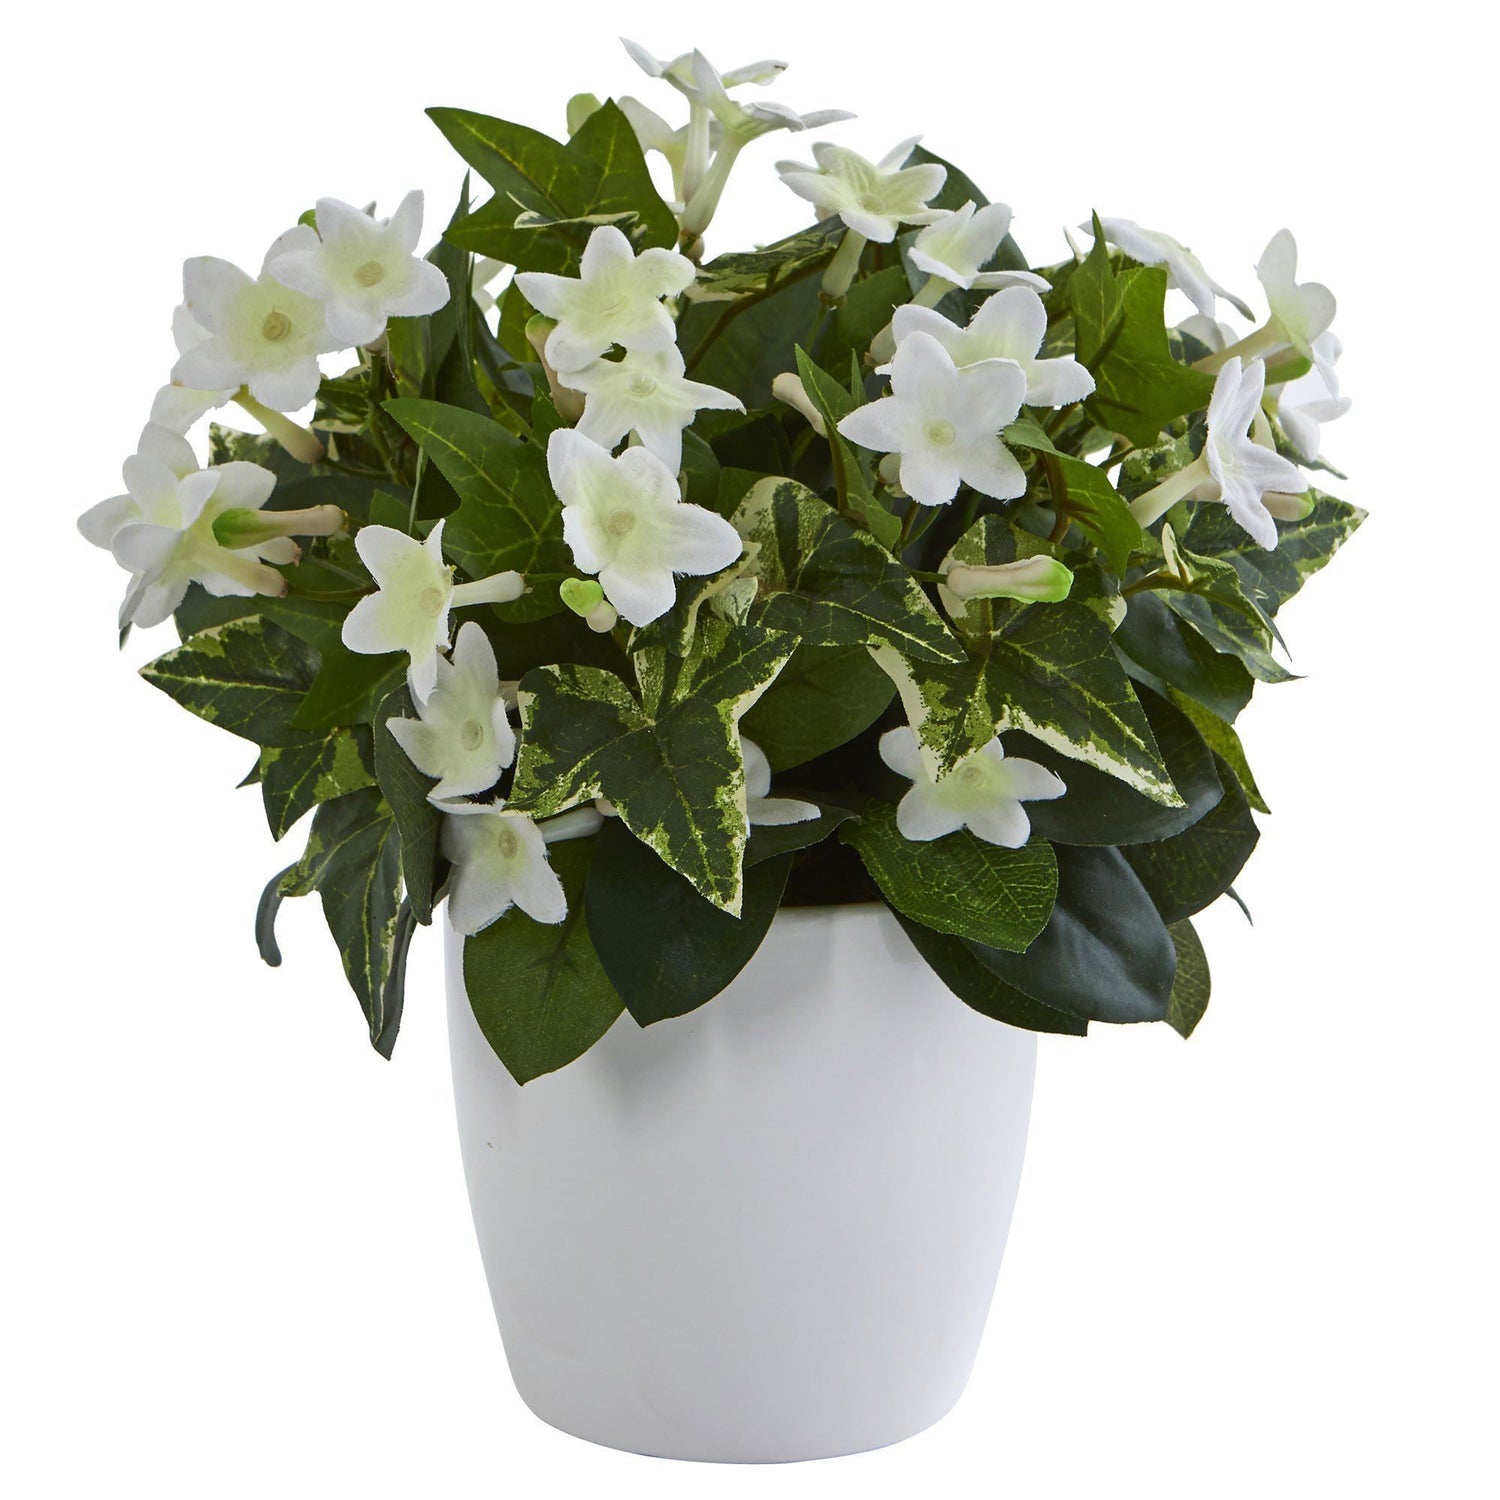 Stephanotis Artificial Plant in White Vase